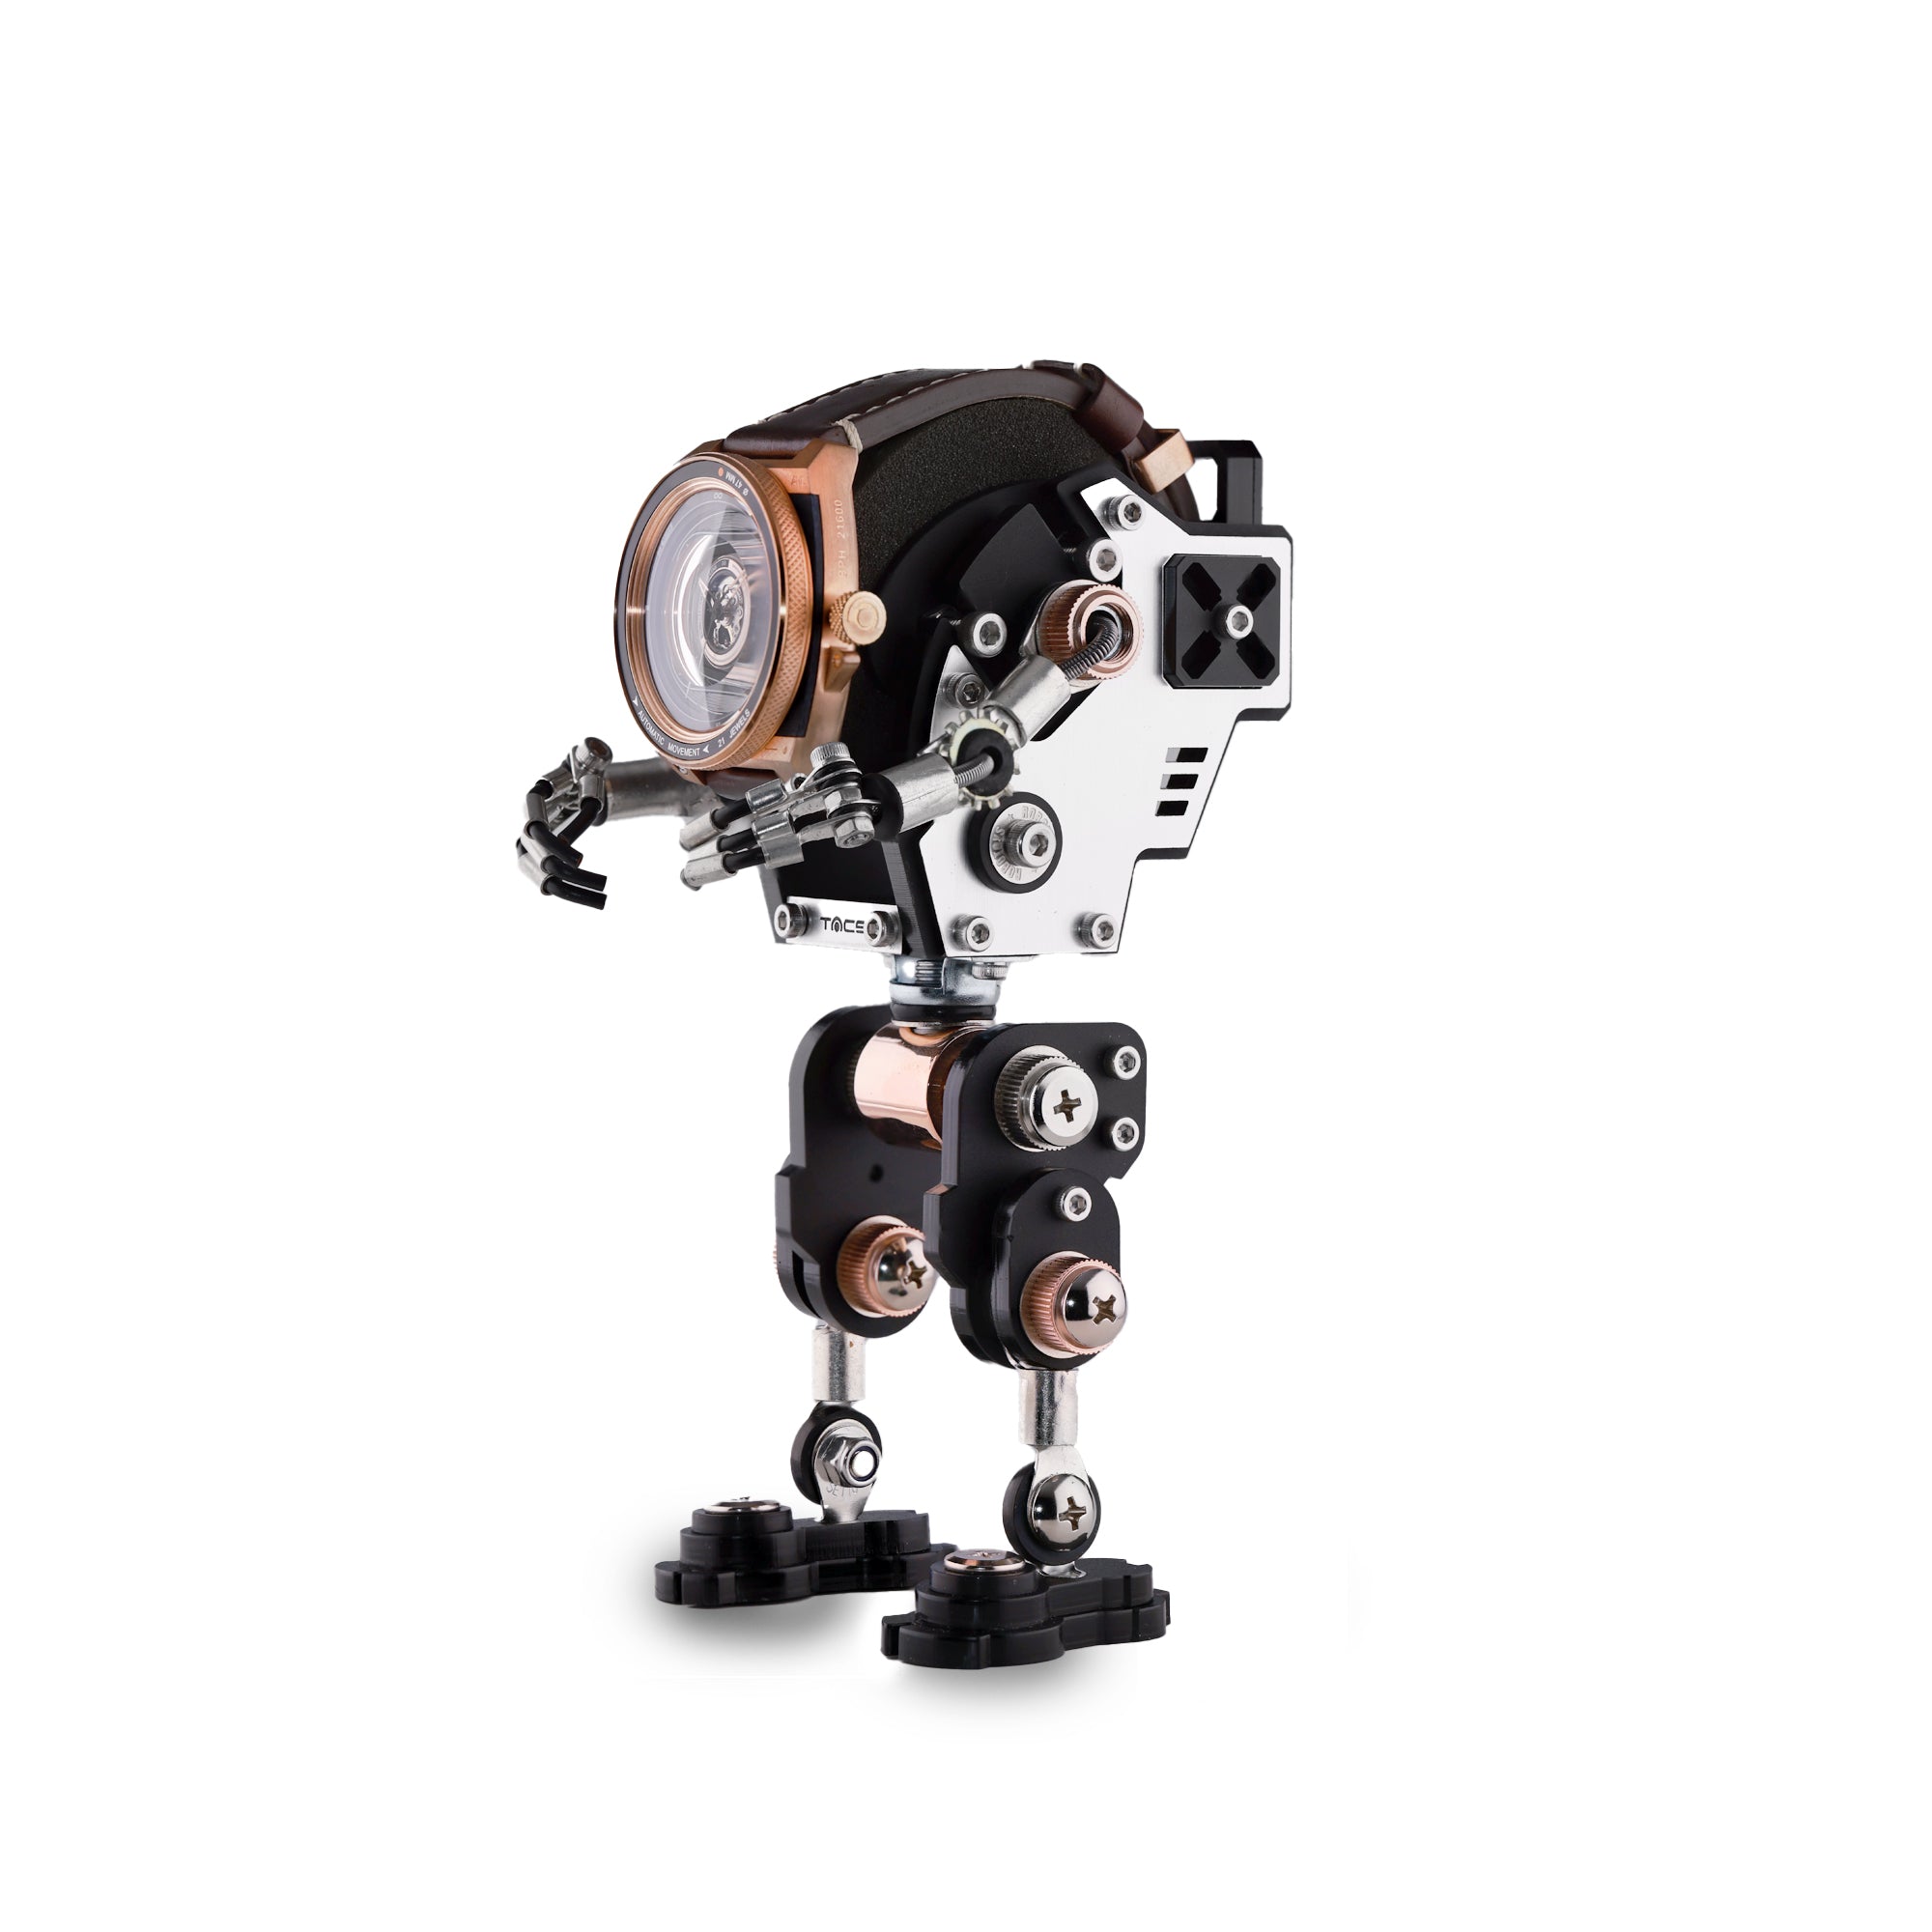 TACS AVL II Bronze X Robotoys Limited Edition (TS1803O)